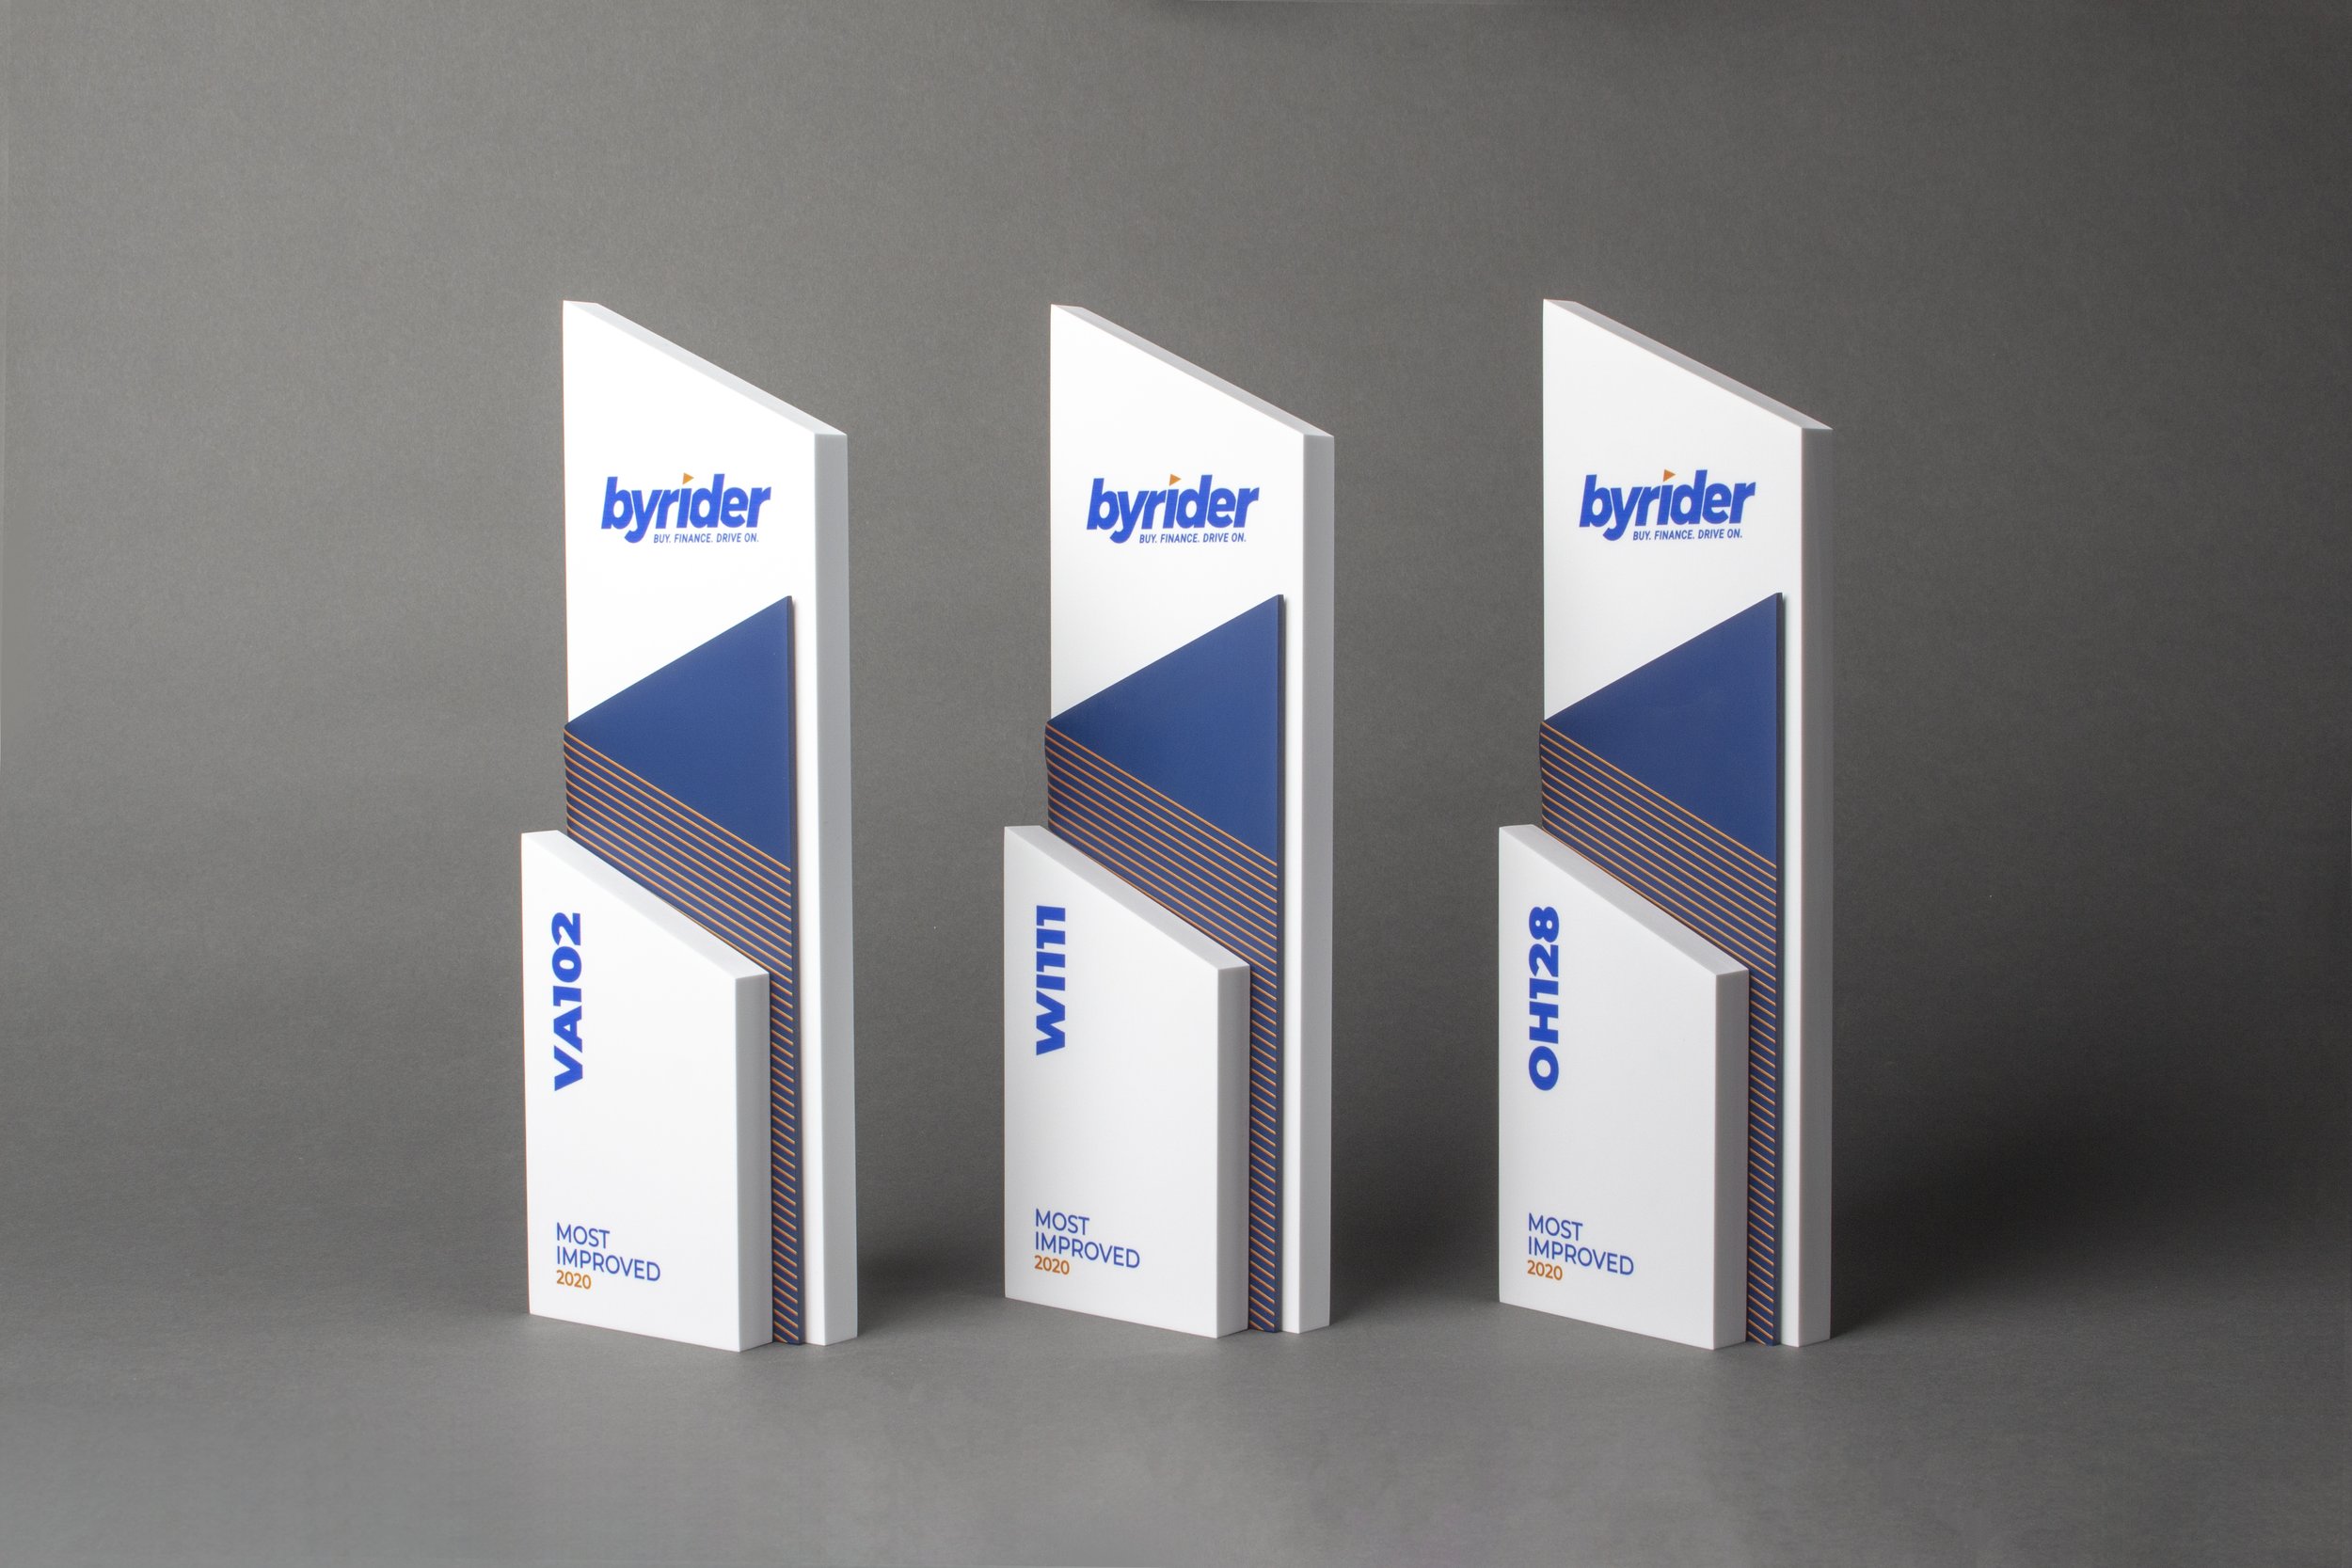 byrider annual conference awards custom design 8.jpg